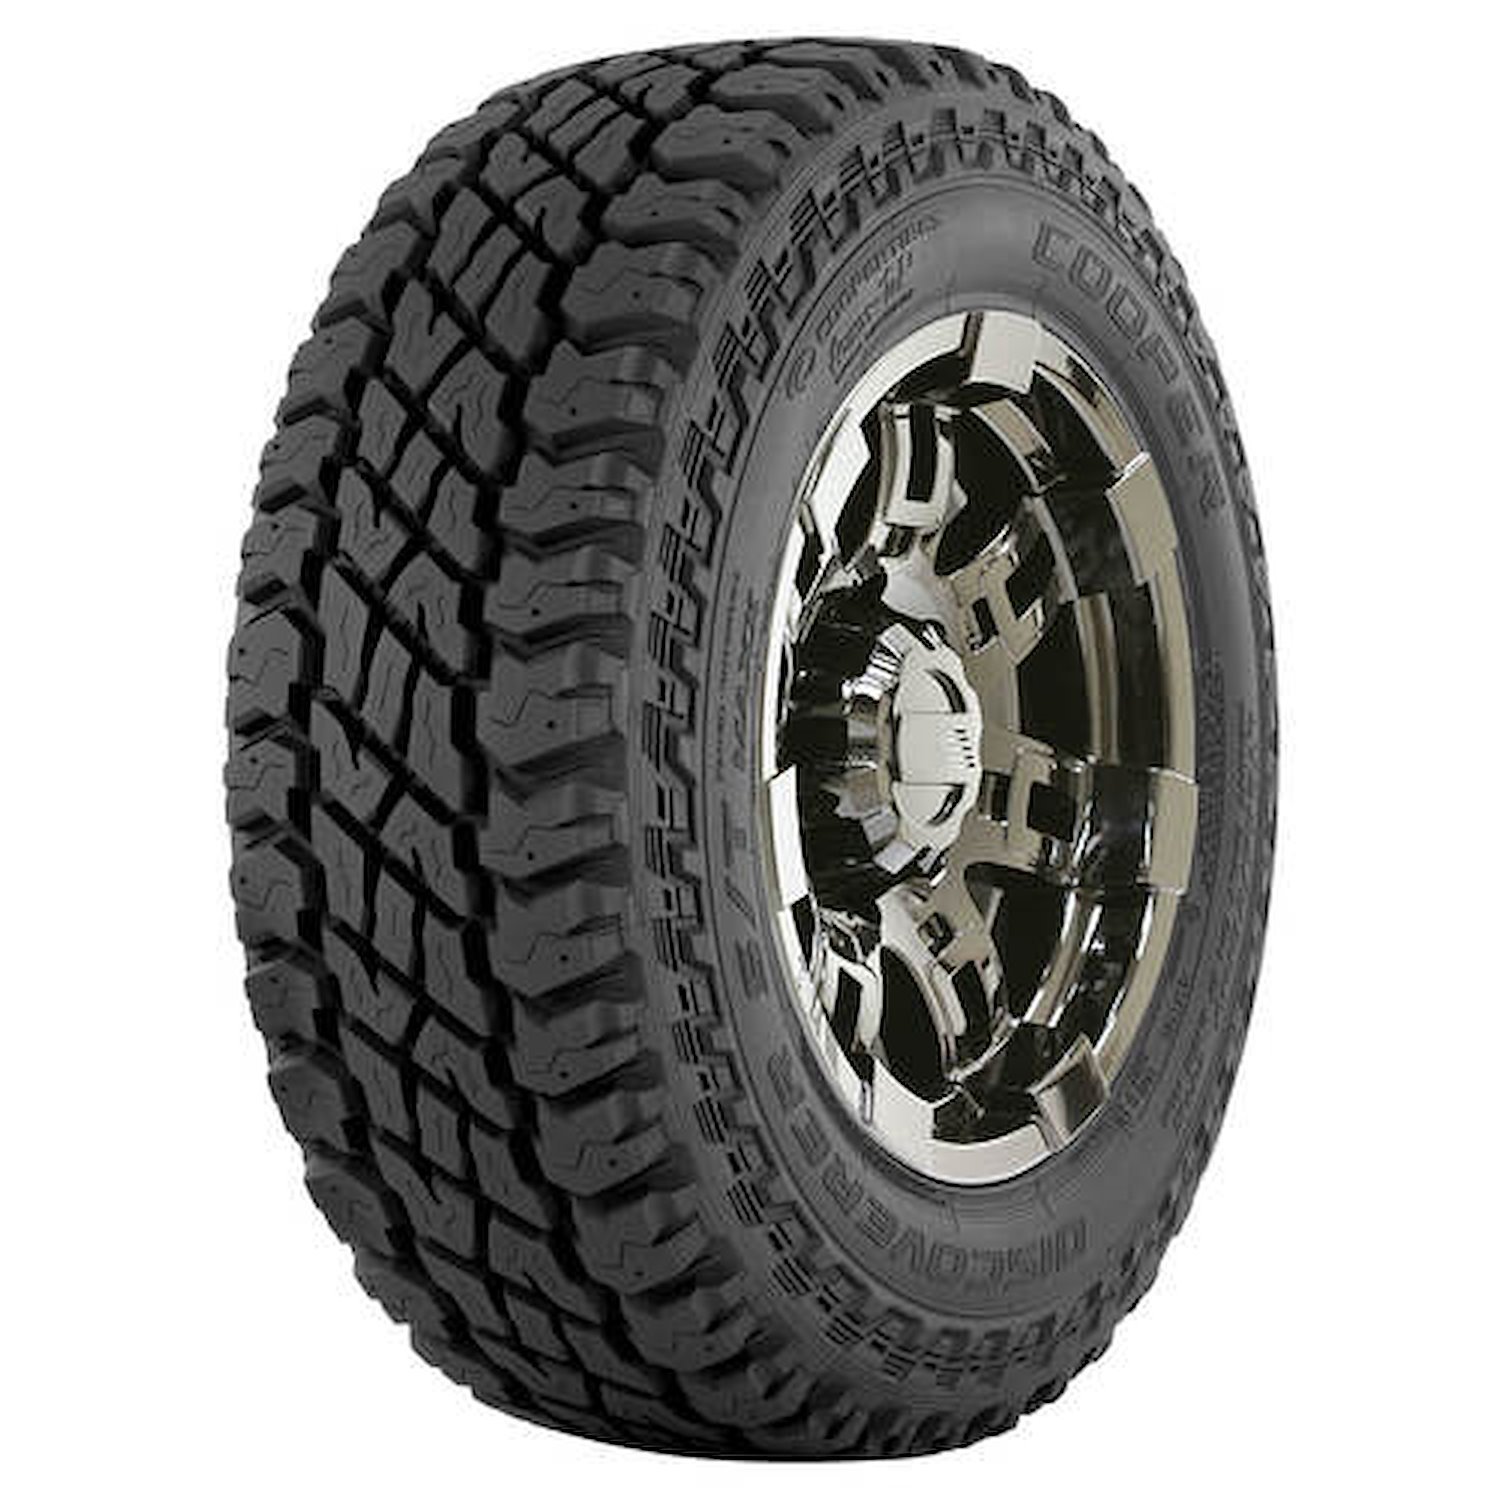 Discoverer S/T Maxx All-Terrain Tire, LT285/75R16